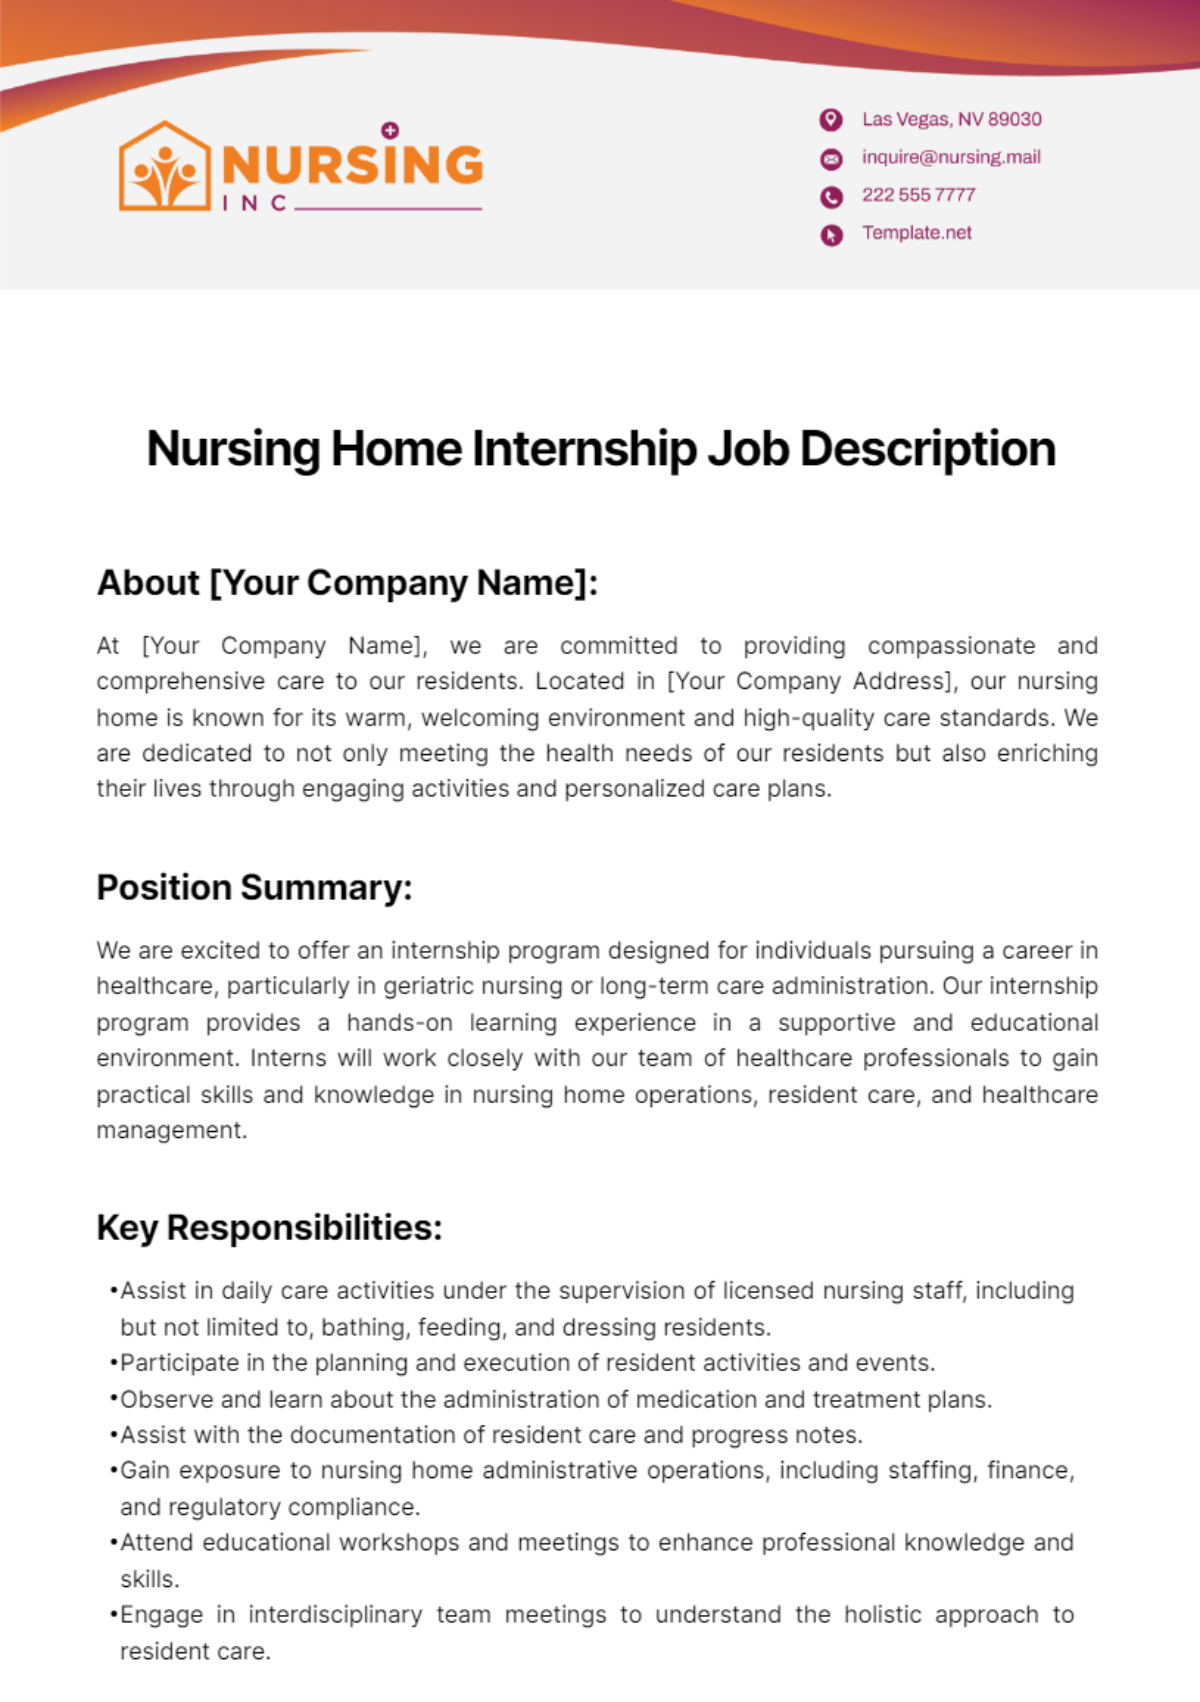 Nursing Home Internship Job Description Template